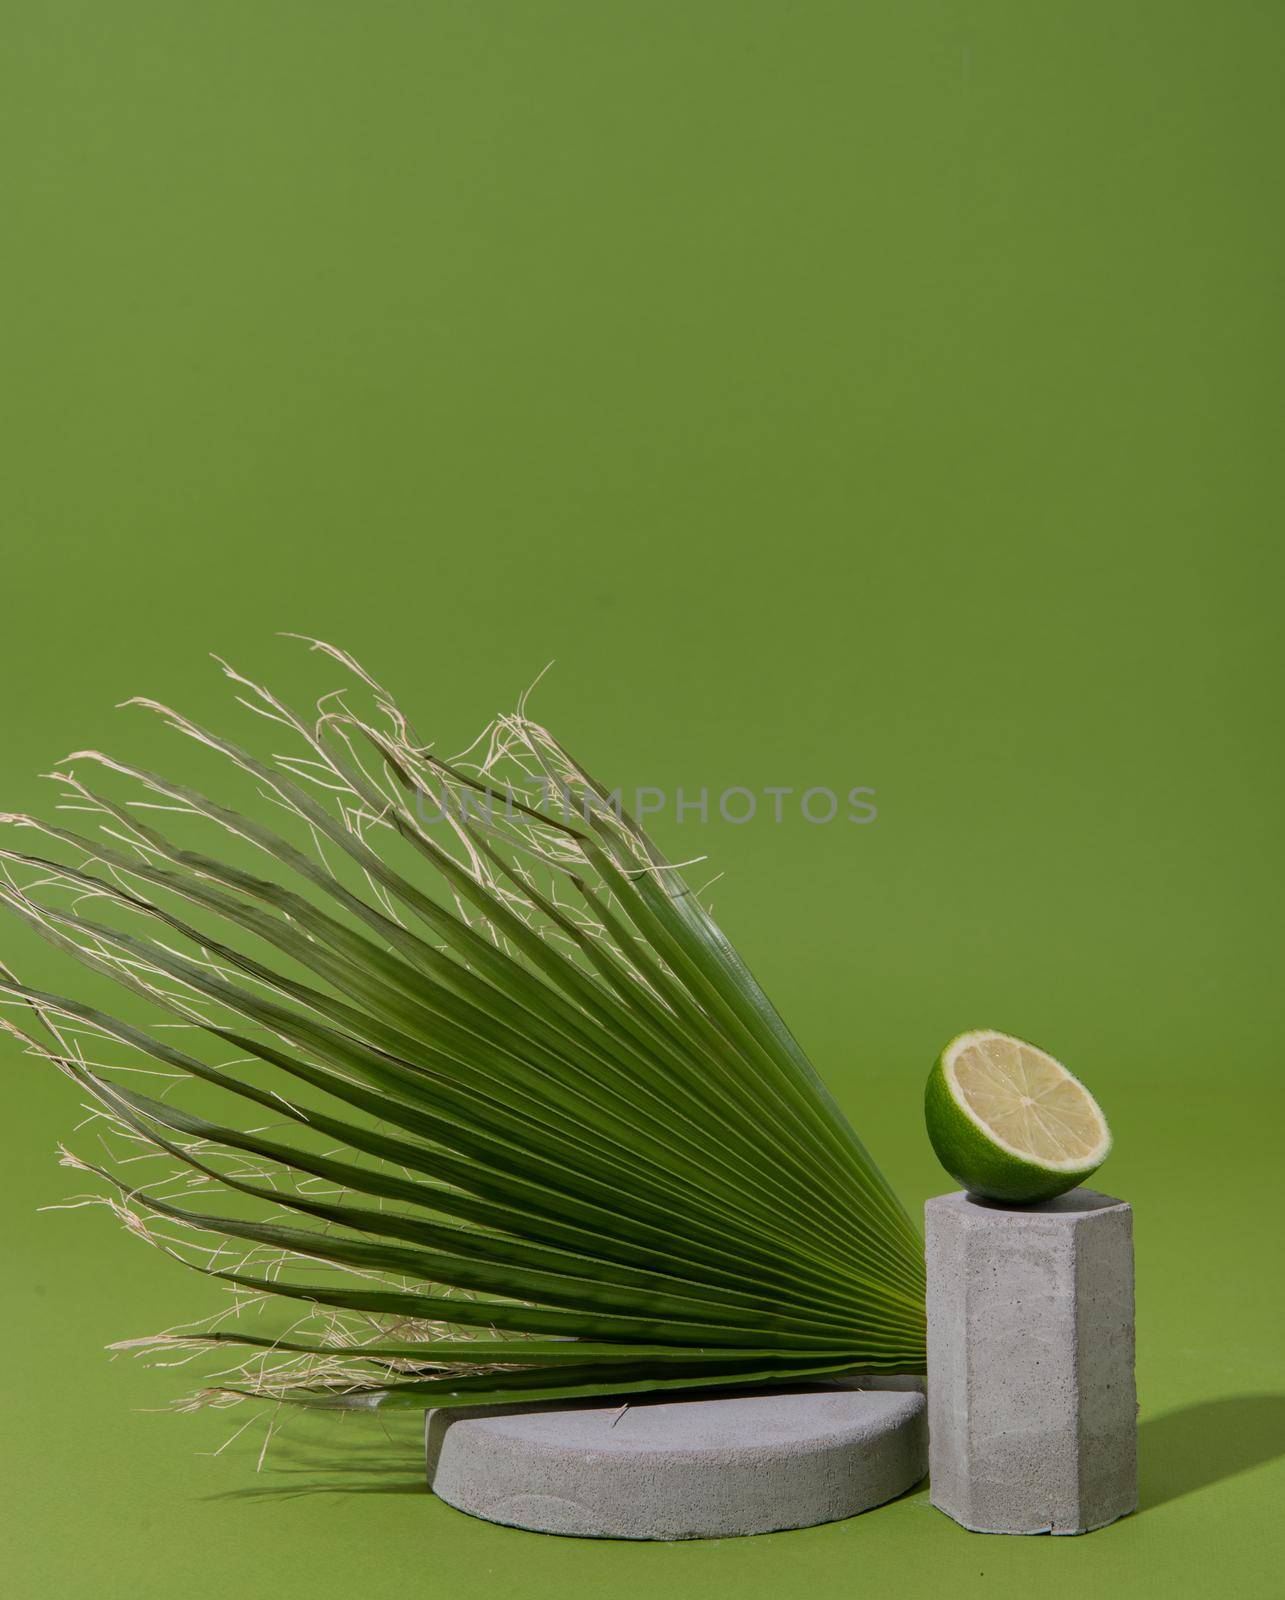 mockup with palm leaf, lime half and concrete shapes. High quality photo